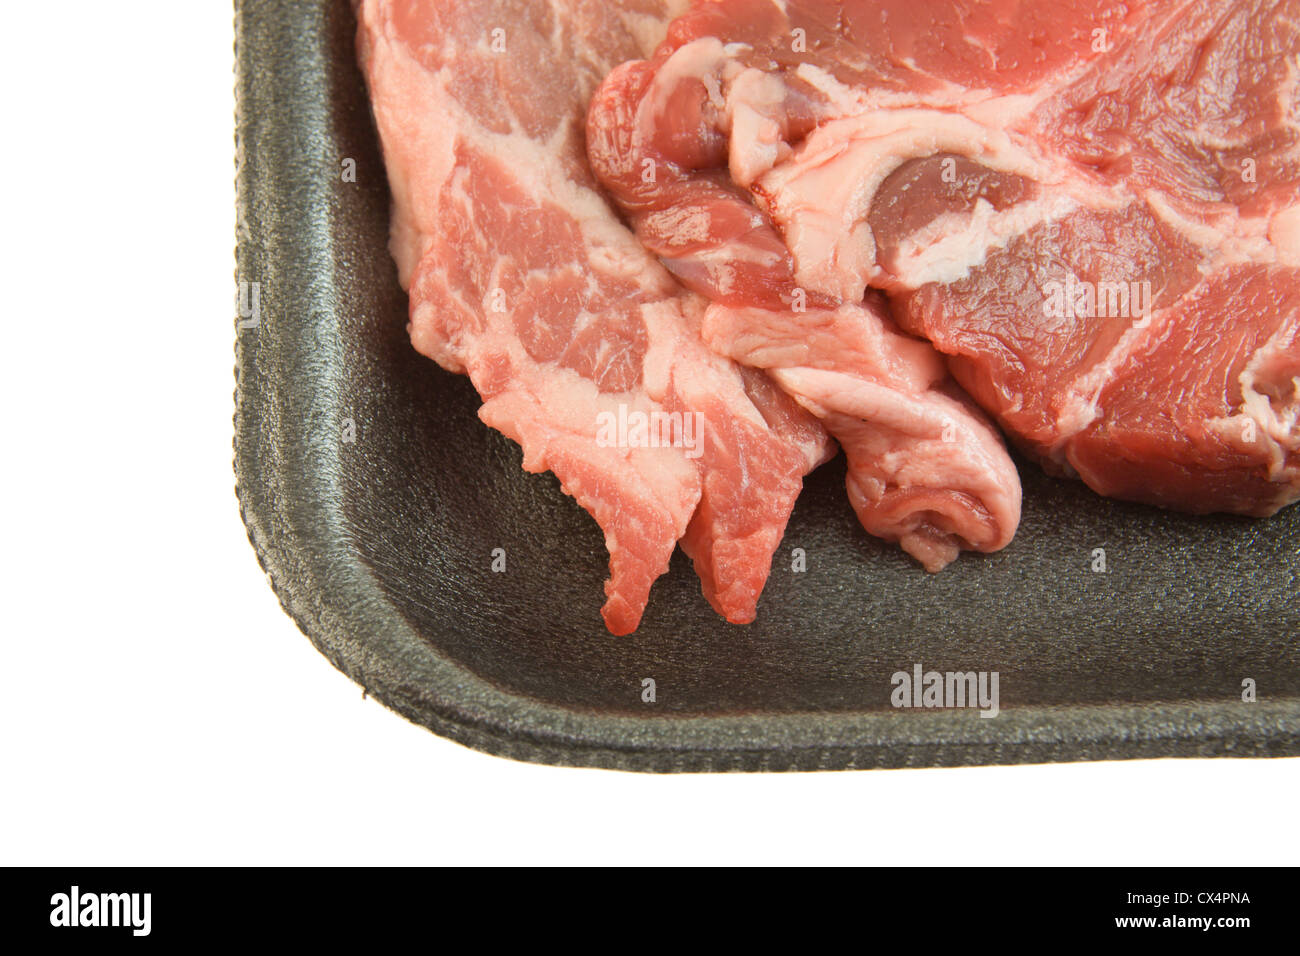 closeup view of a fresh, boneless, thin cut blade steak in a black foam tray Stock Photo